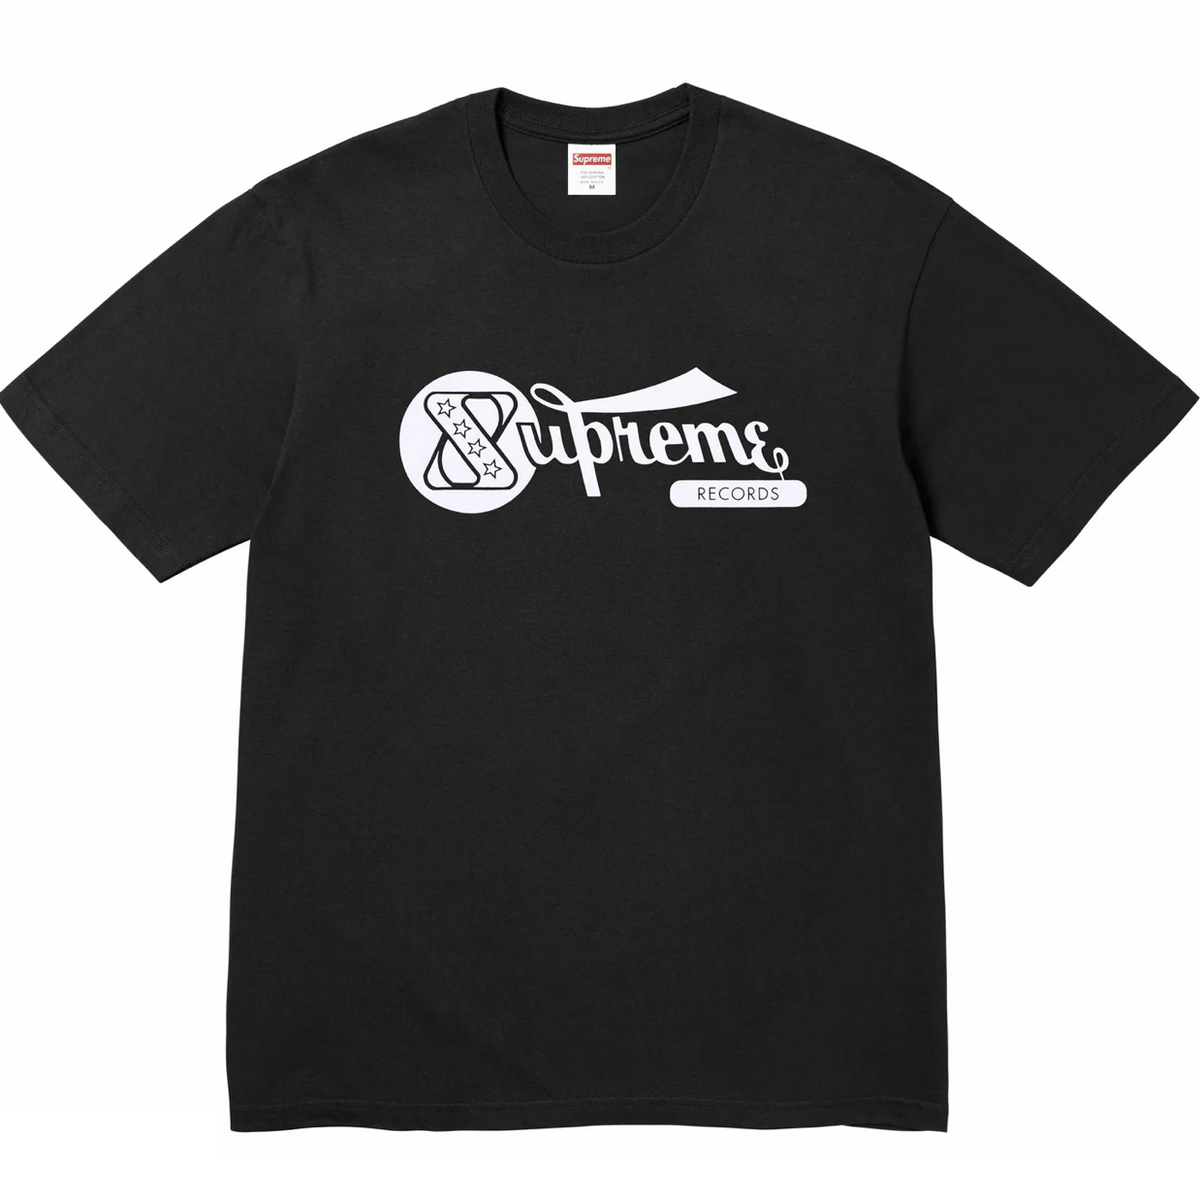 Supreme Letter LOGO Print T-Shirt